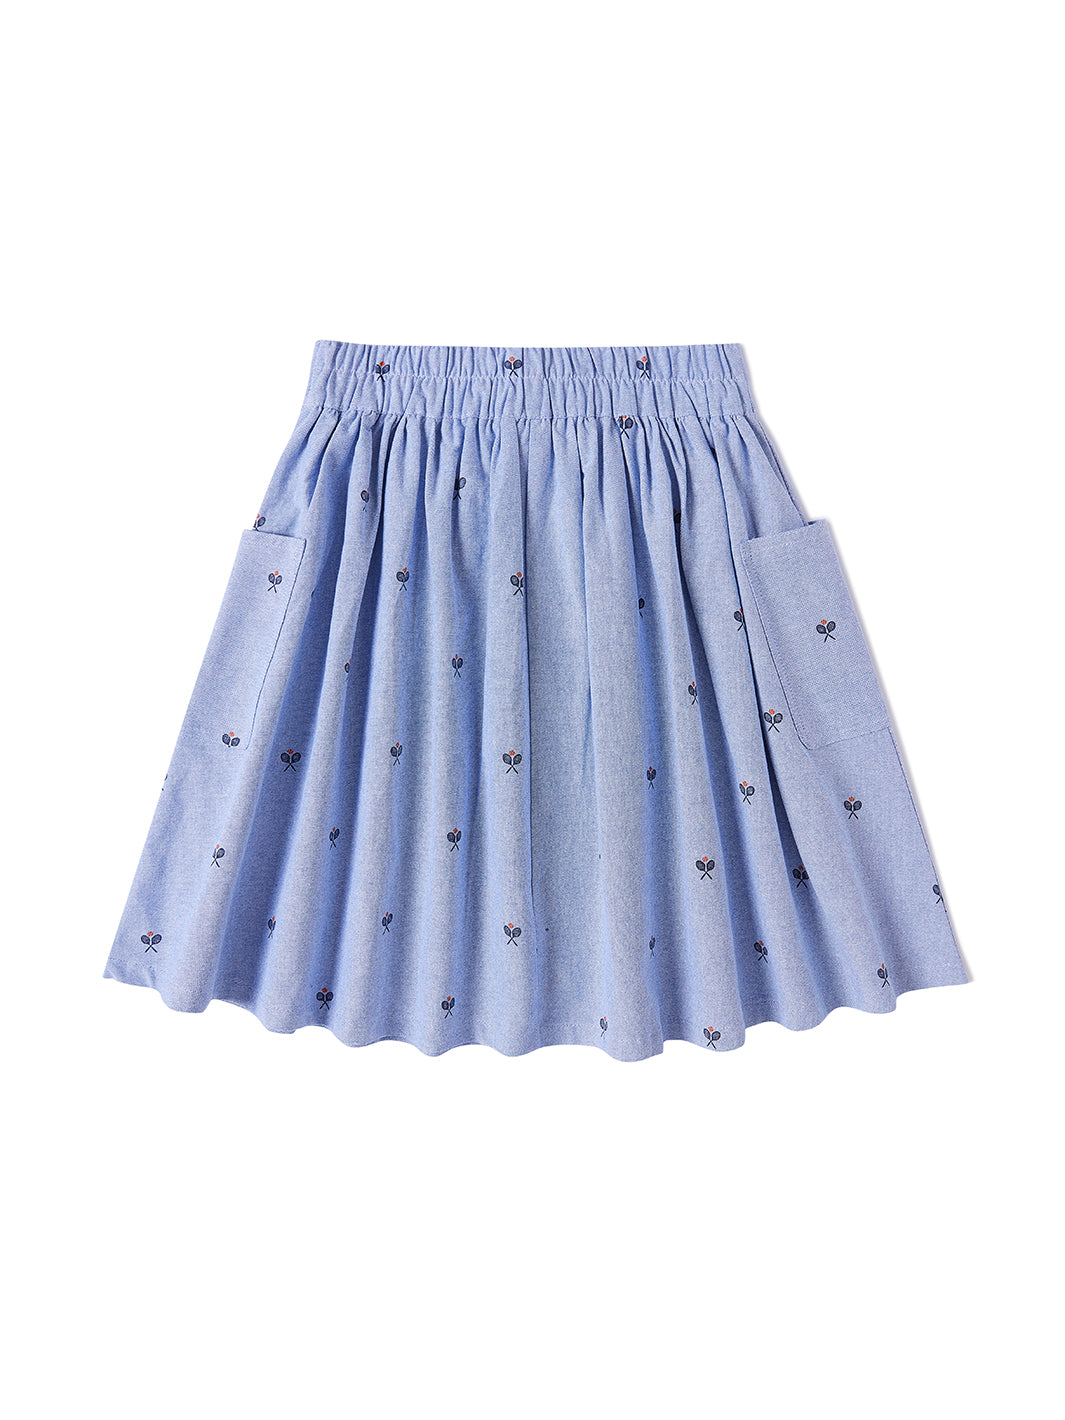 Tennis print Skirt